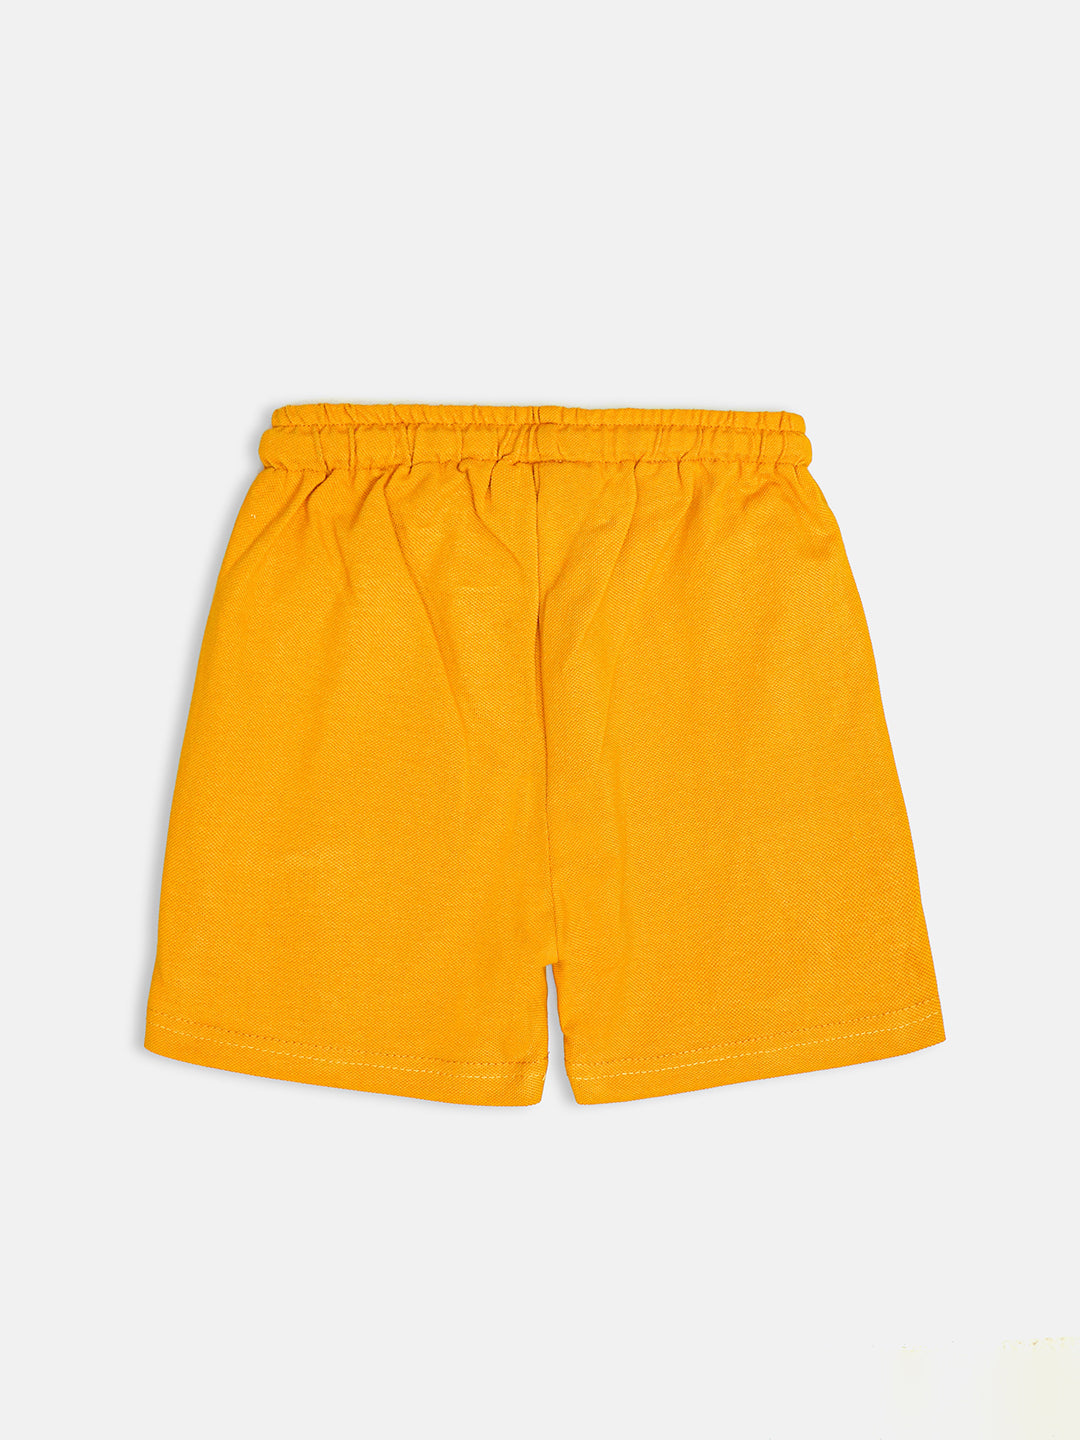 Boys Cotton Shorts Combo- White, Yellow, Maroon